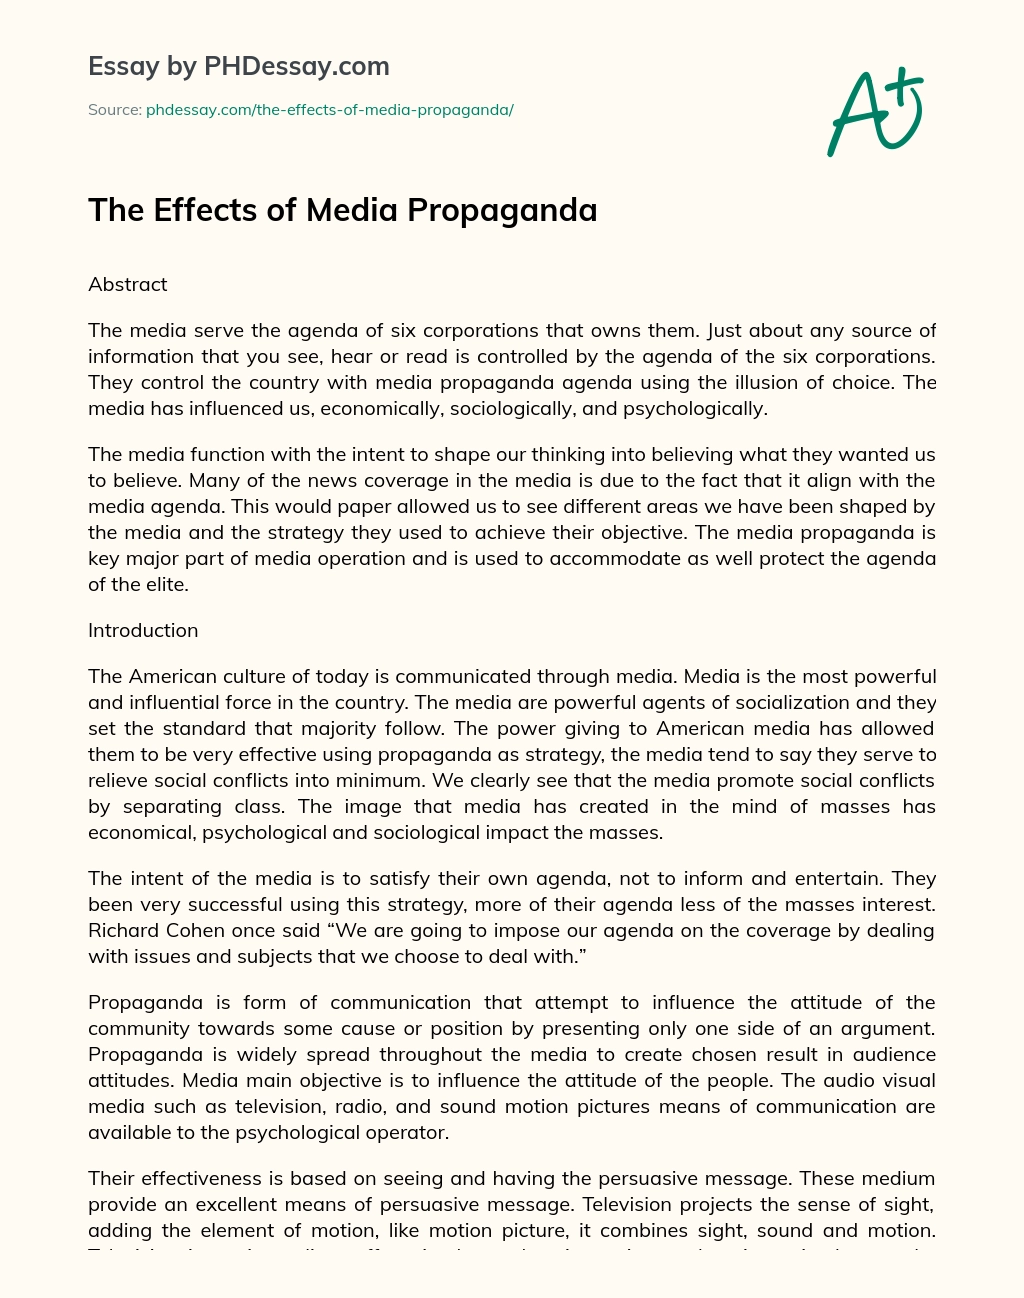 The Effects of Media Propaganda essay